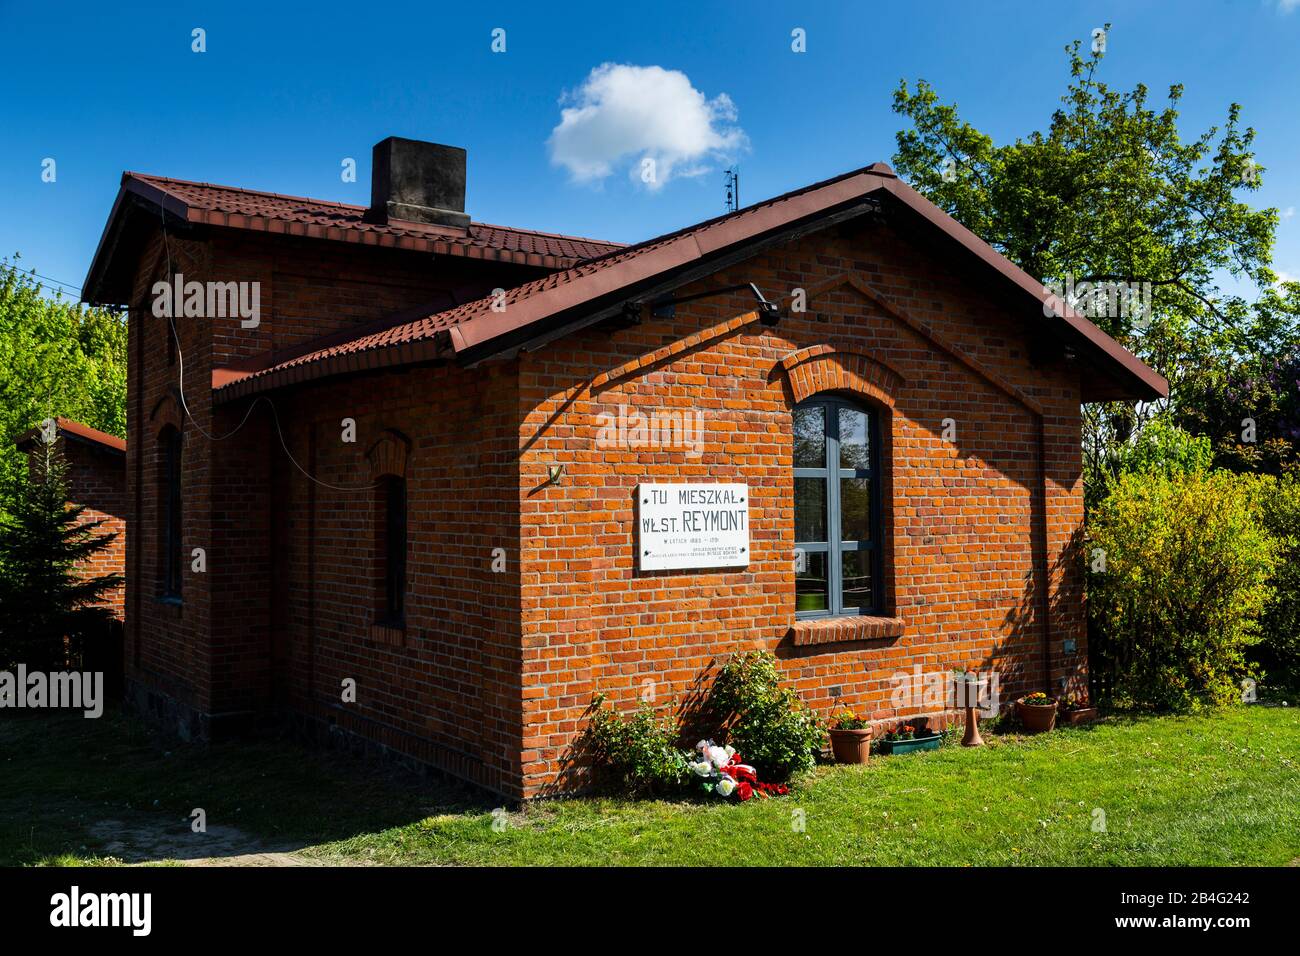 Europe, Poland, Voivodeship Lodz, Lipce Reymontowskie - Regional Museum of WÅ‚adysÅ‚aw StanisÅ‚aw Reymont Stock Photo